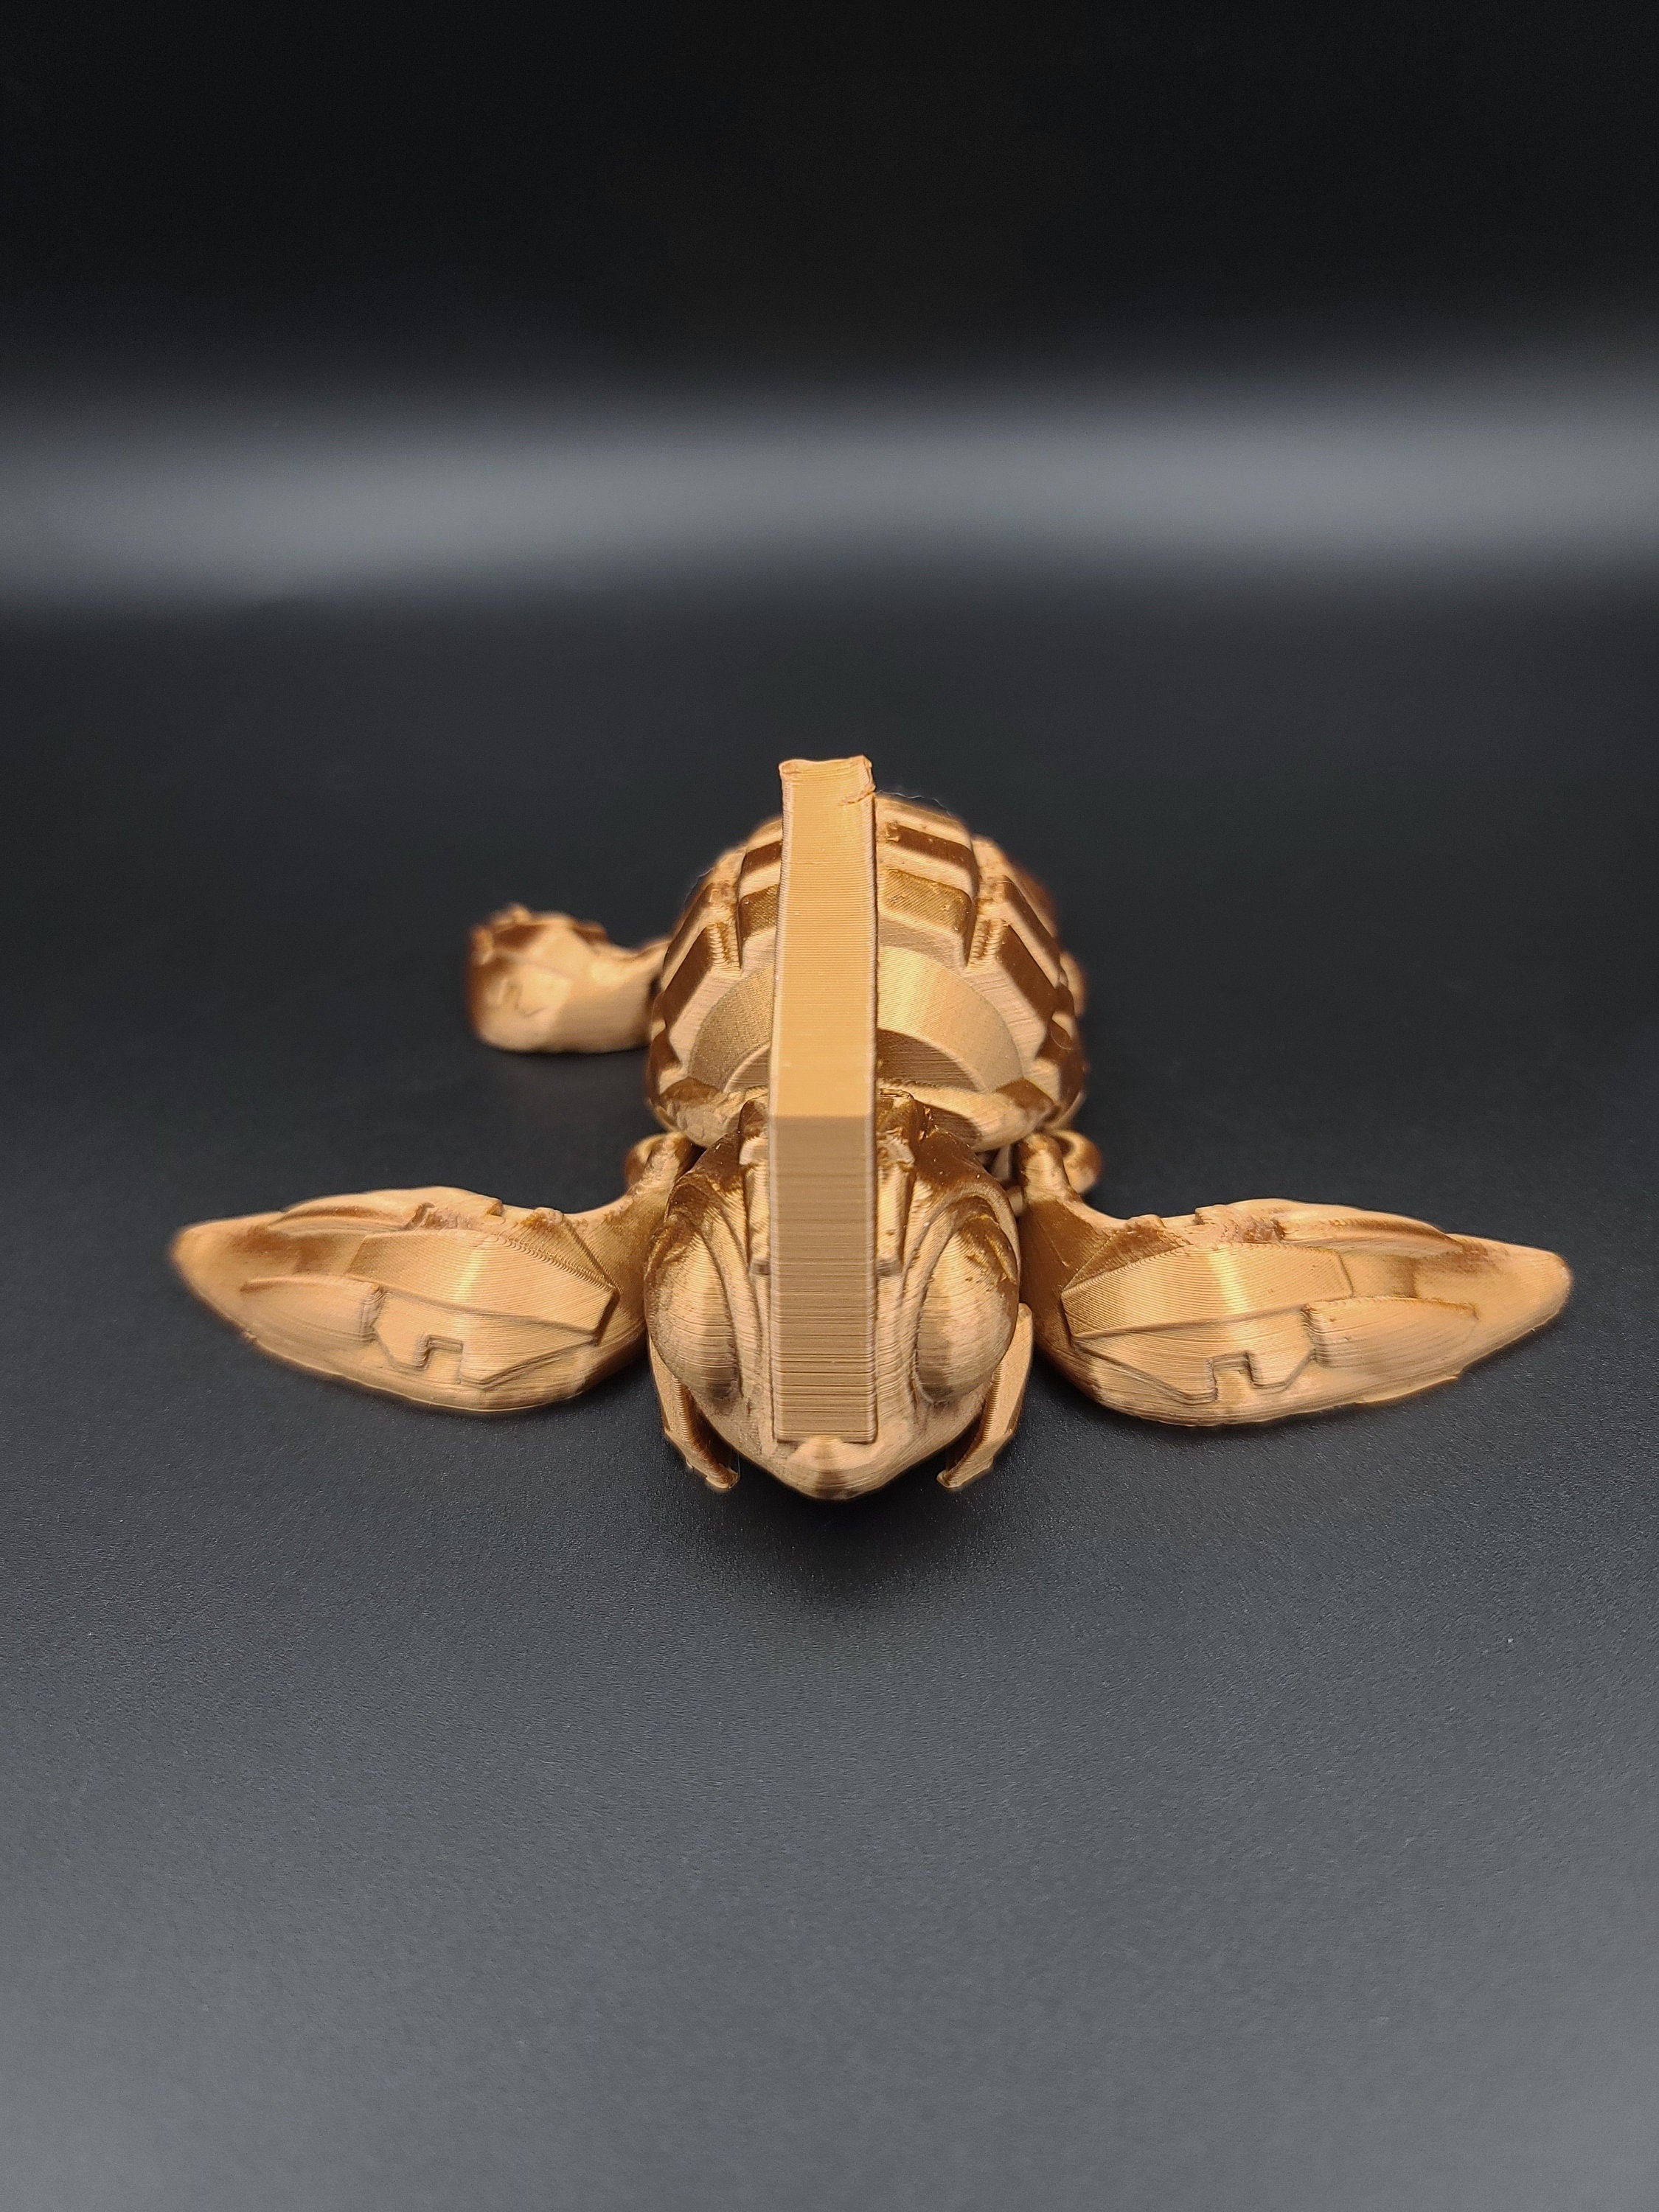 Turtle- Grenurtle | Grenade / Turtle 3D Printed (MADE) | Copper Color | Adult Fidget Toy | Sensory Turtle Buddy.